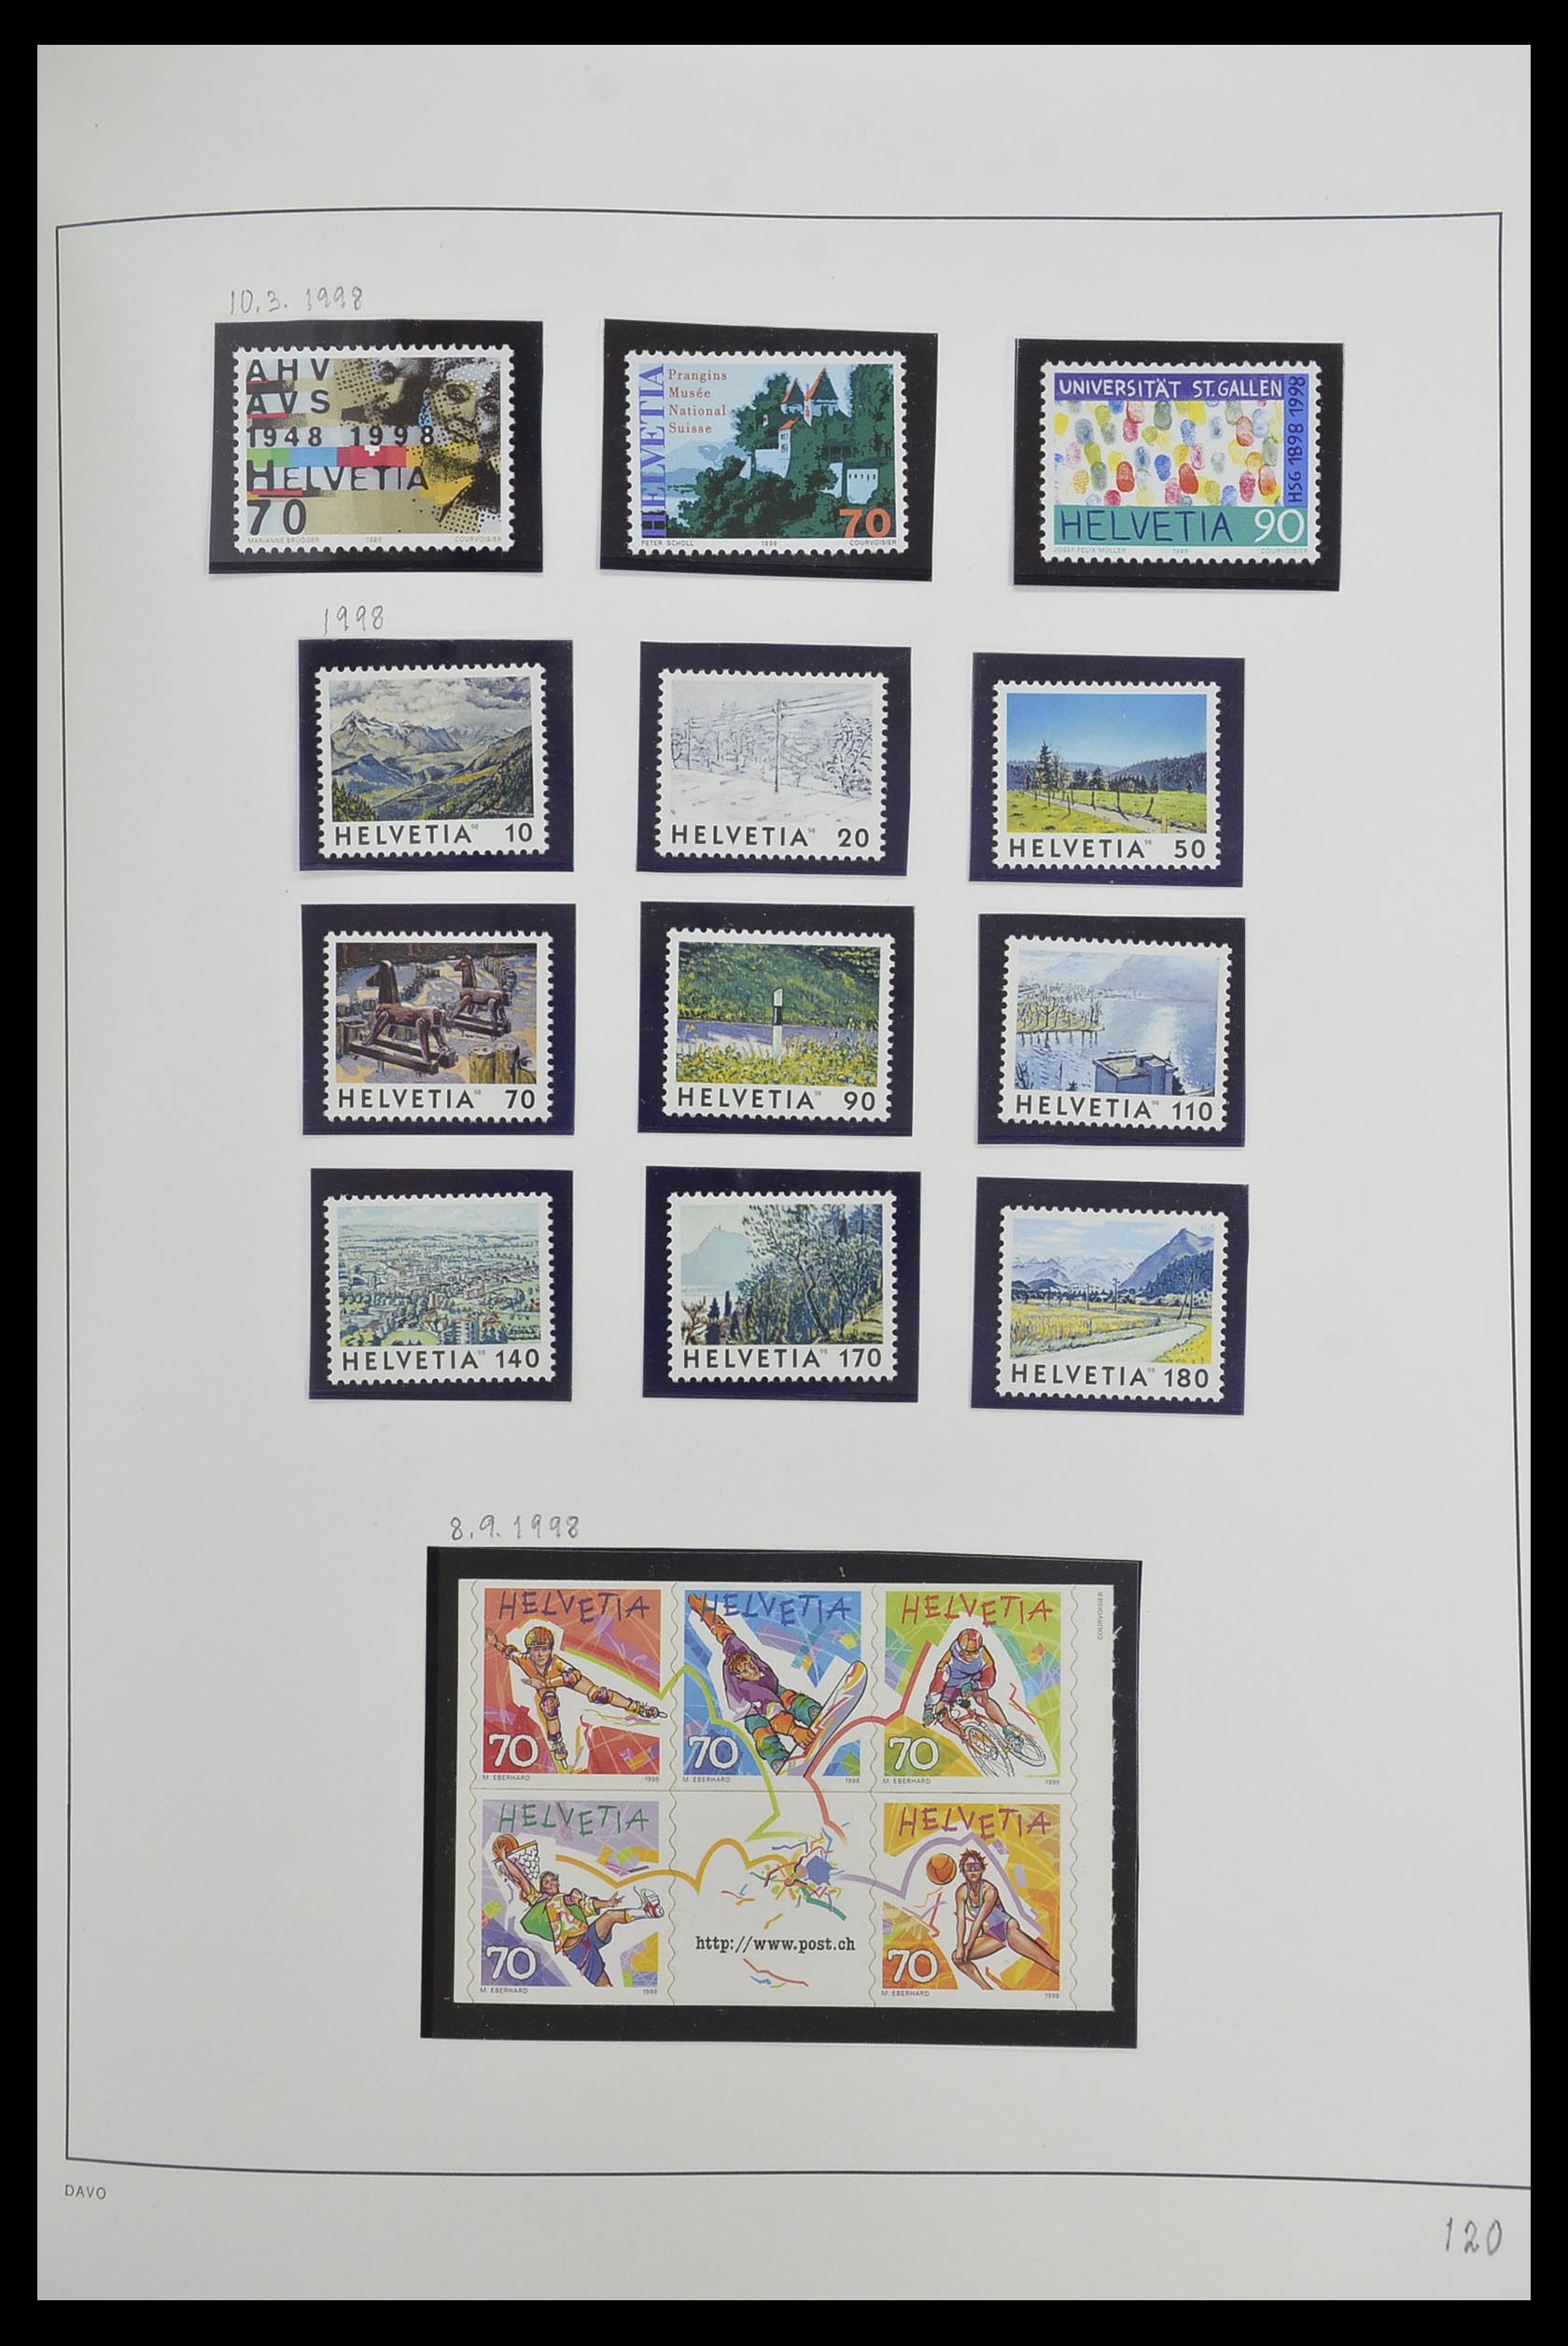 33556 123 - Stamp collection 33556 Switzerland 1862-2000.